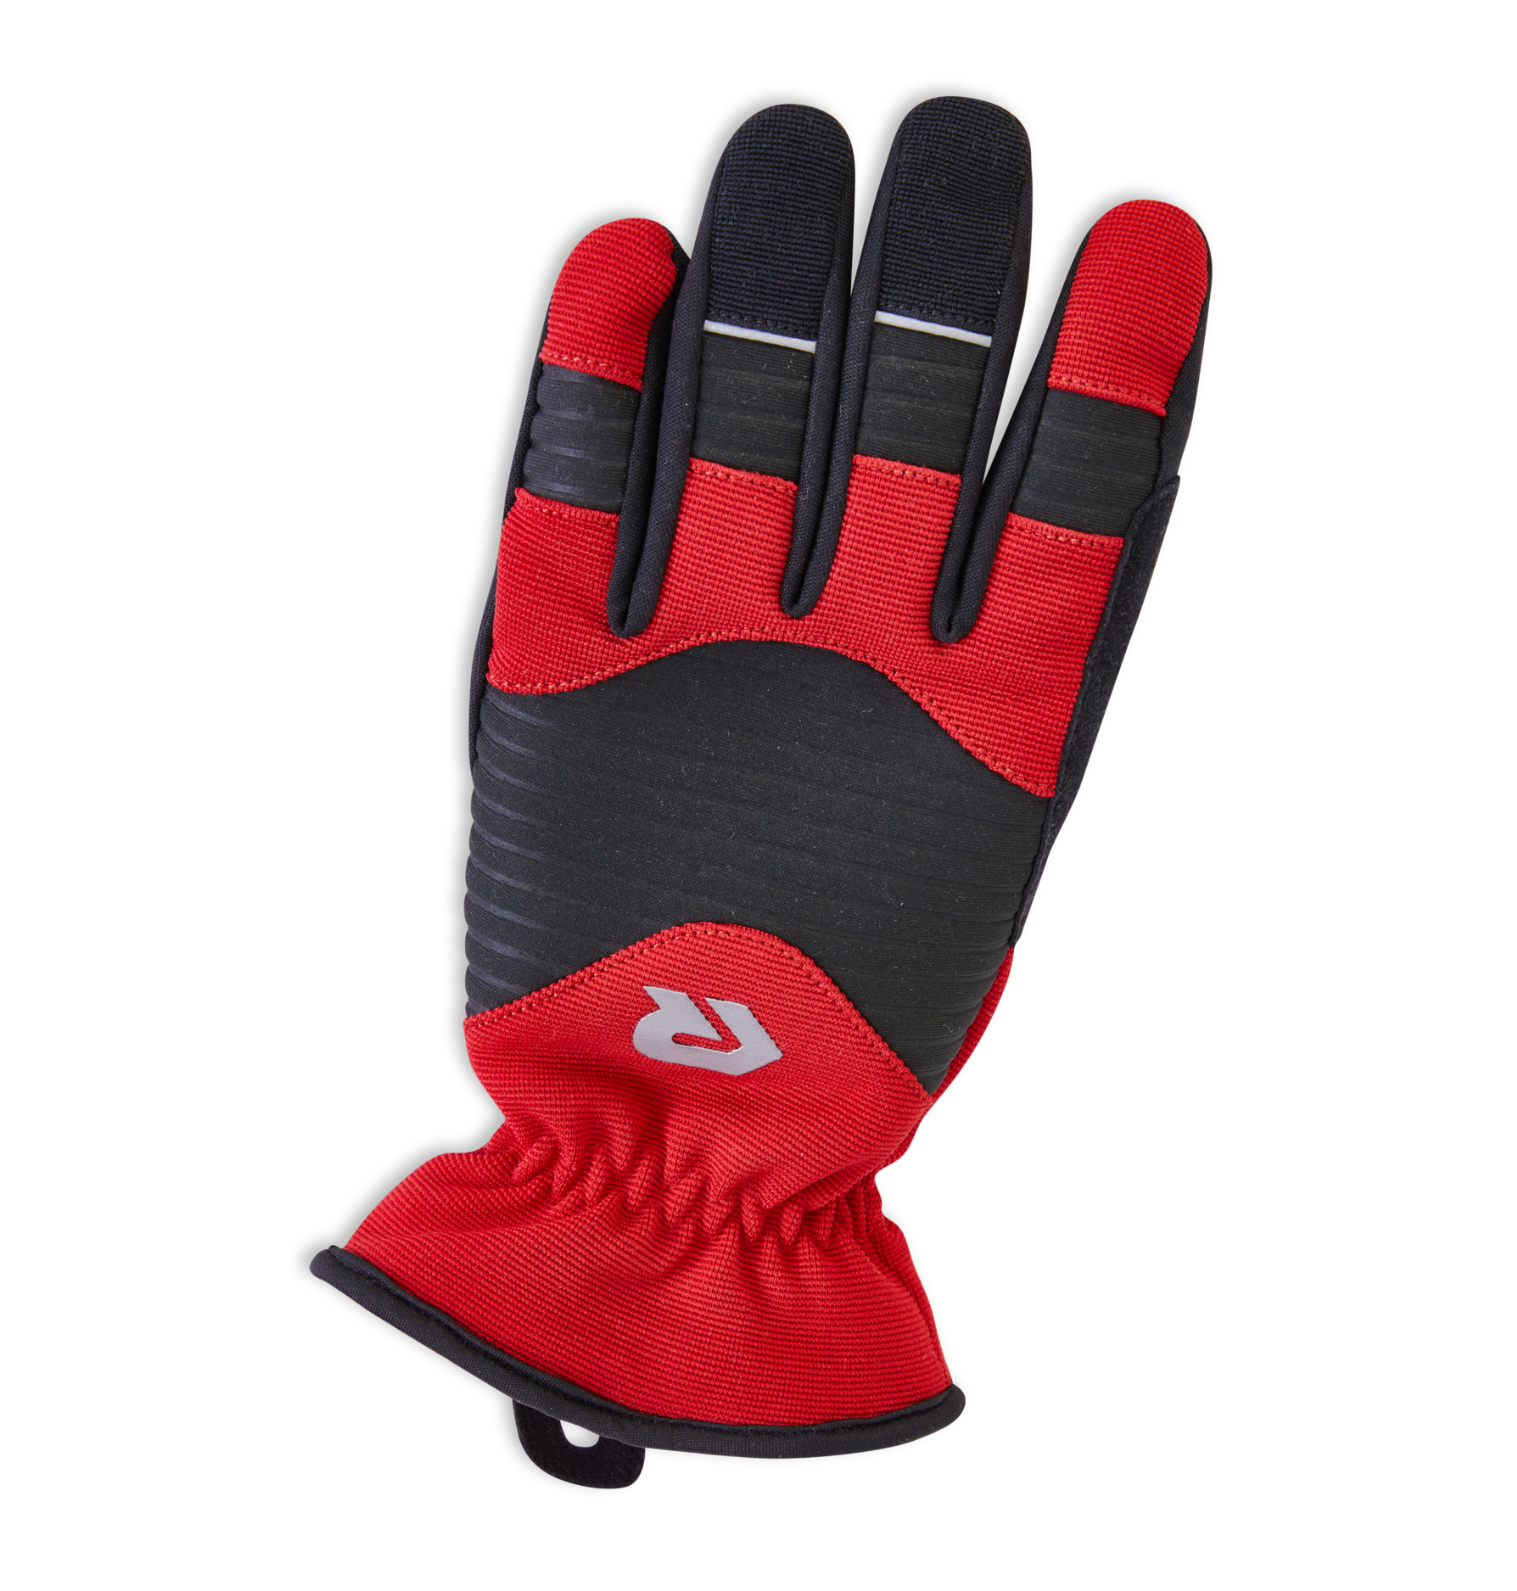 Gloros T1 Technical rescue glove